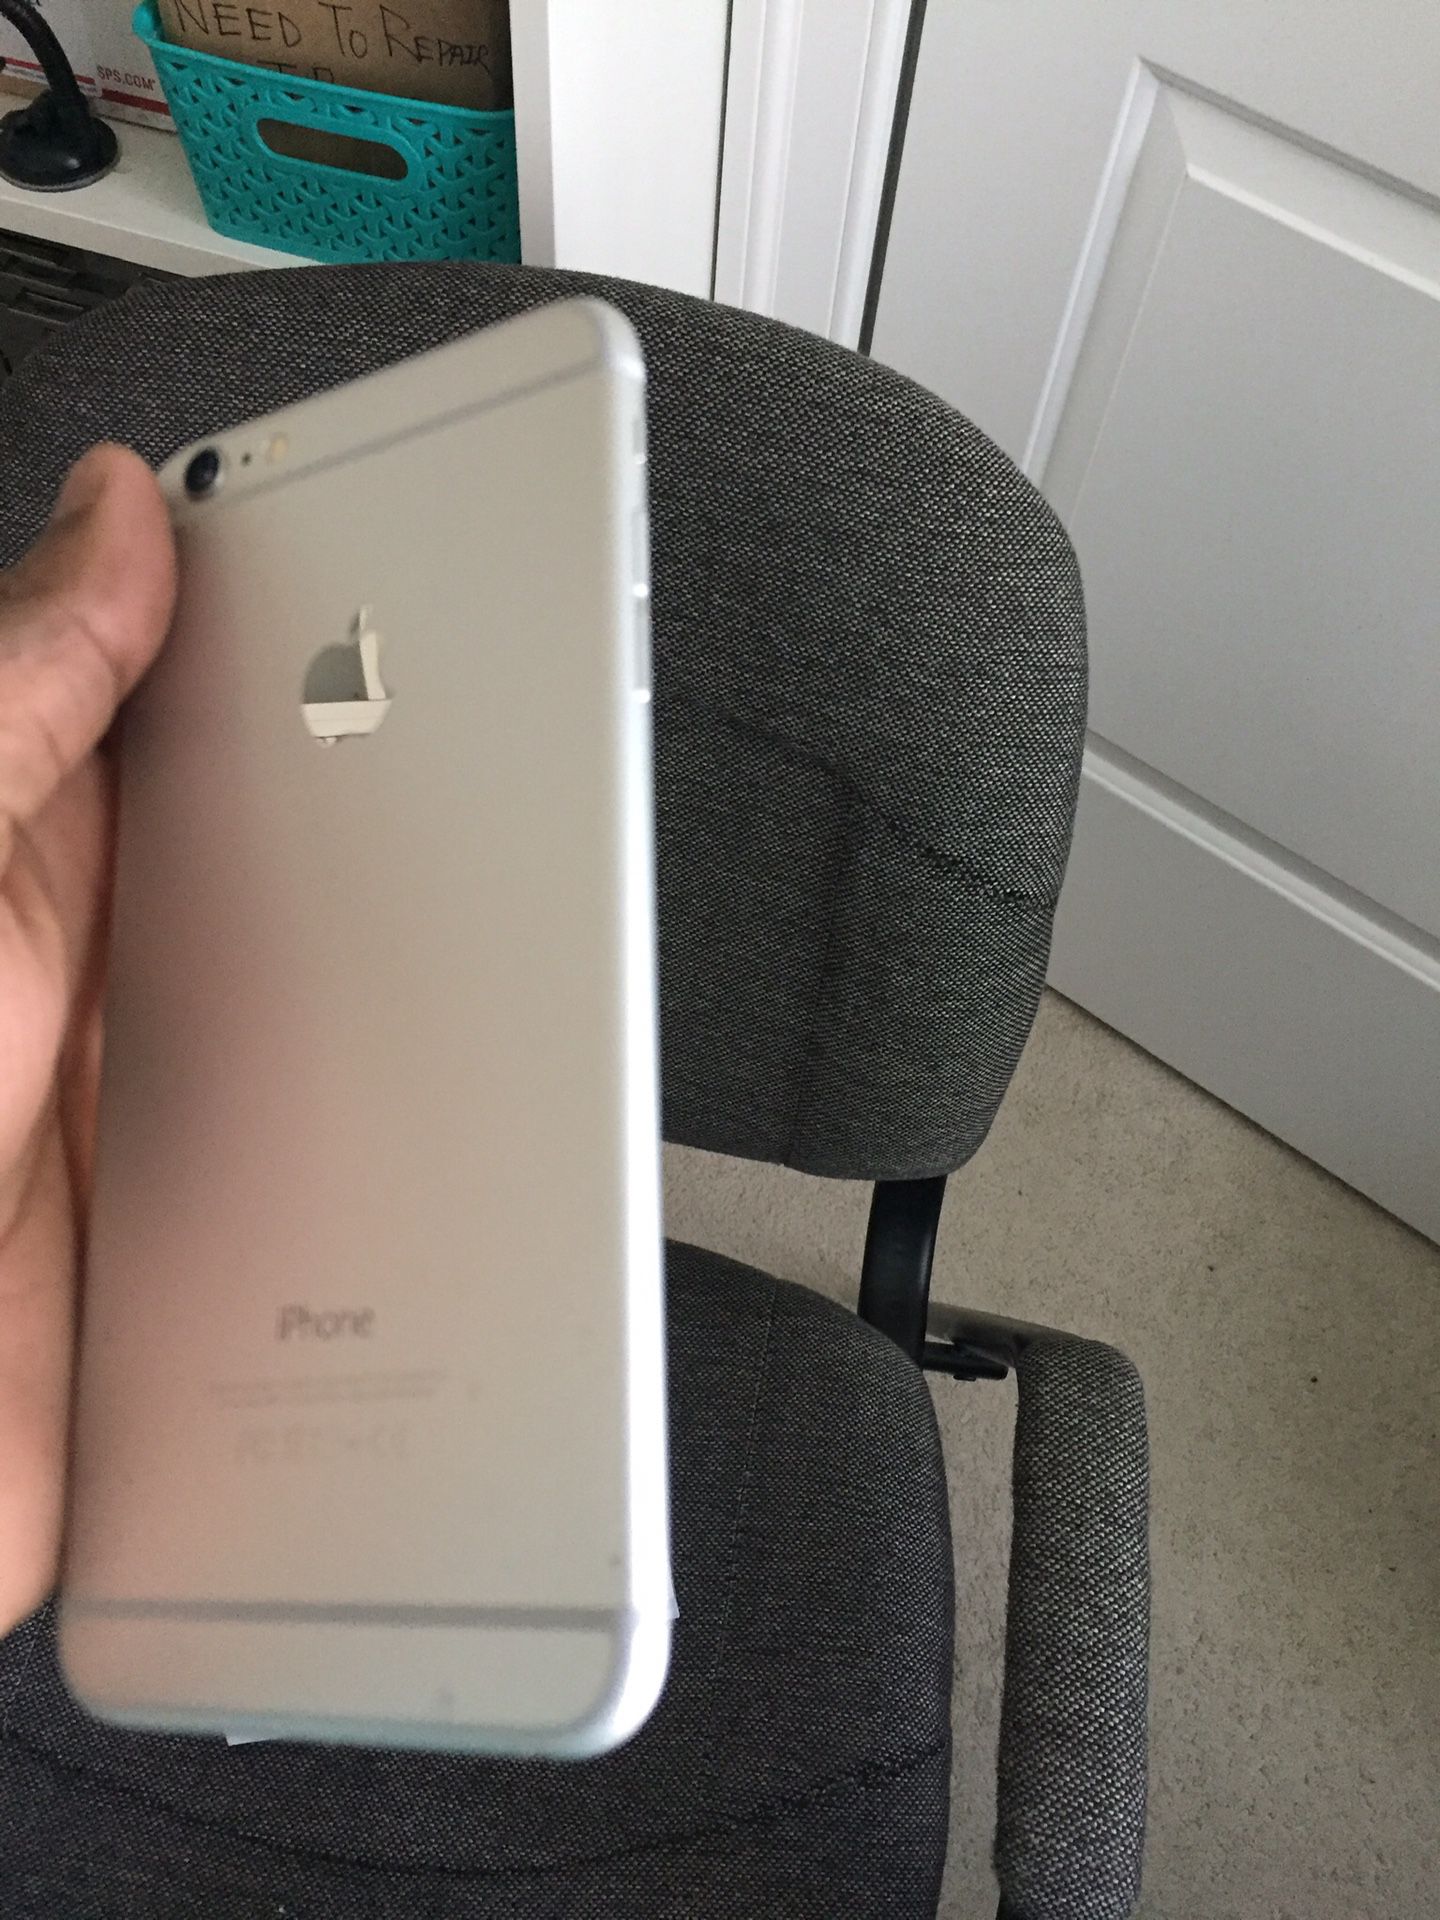 iPhone 6 Plus Factory Unlocked Excellent Condition